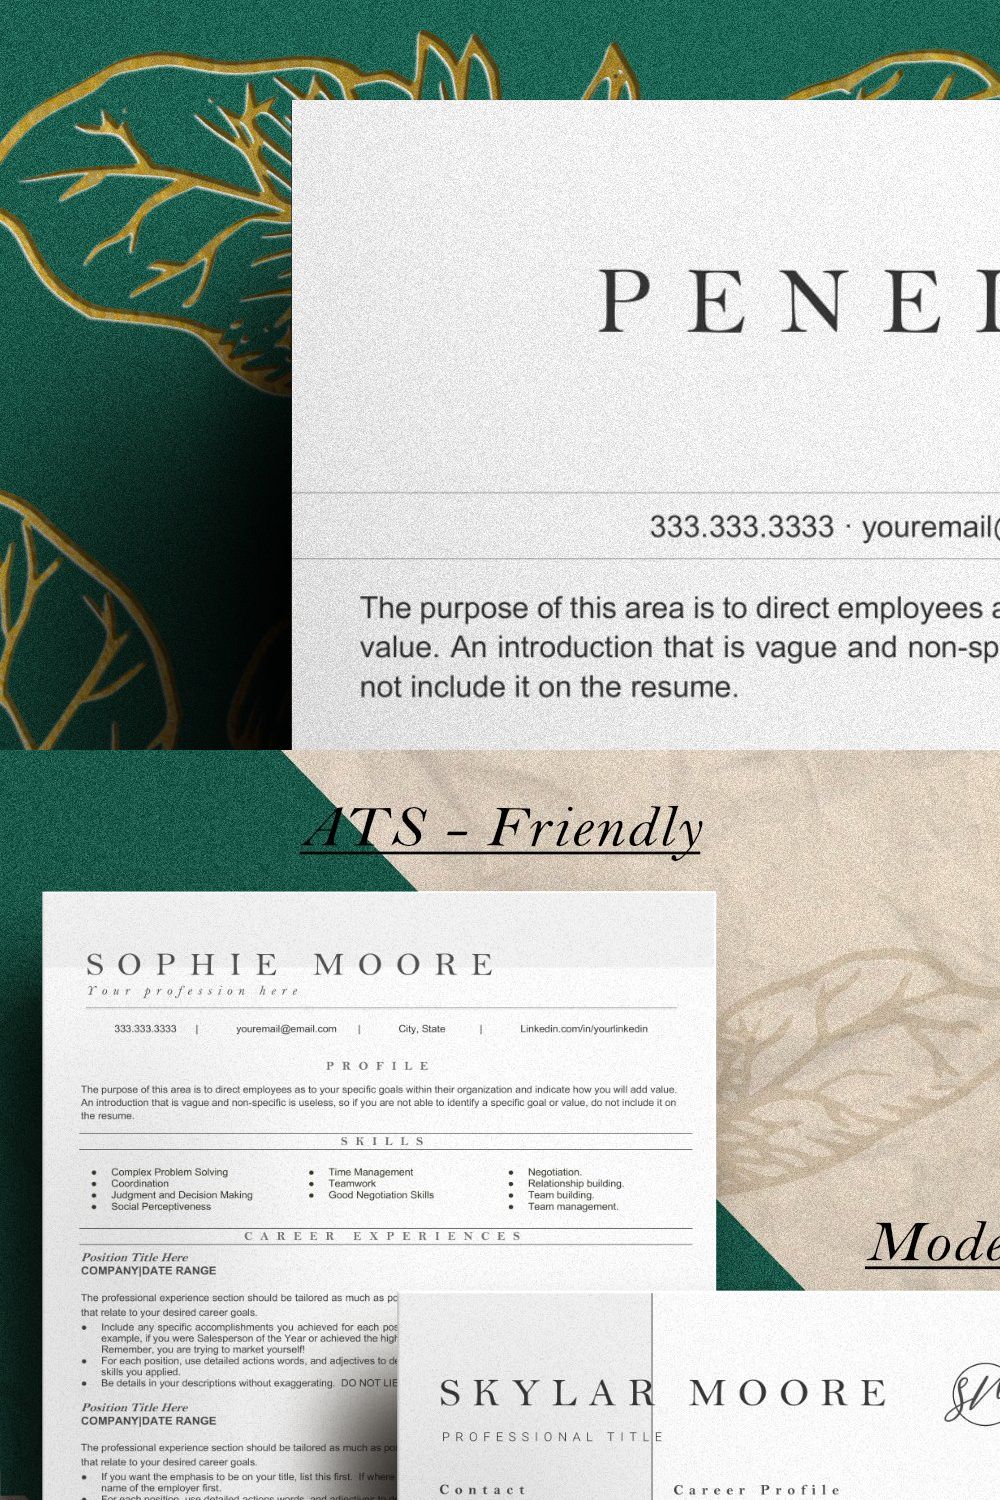 Penelope - Elegant ATS Resume pinterest preview image.